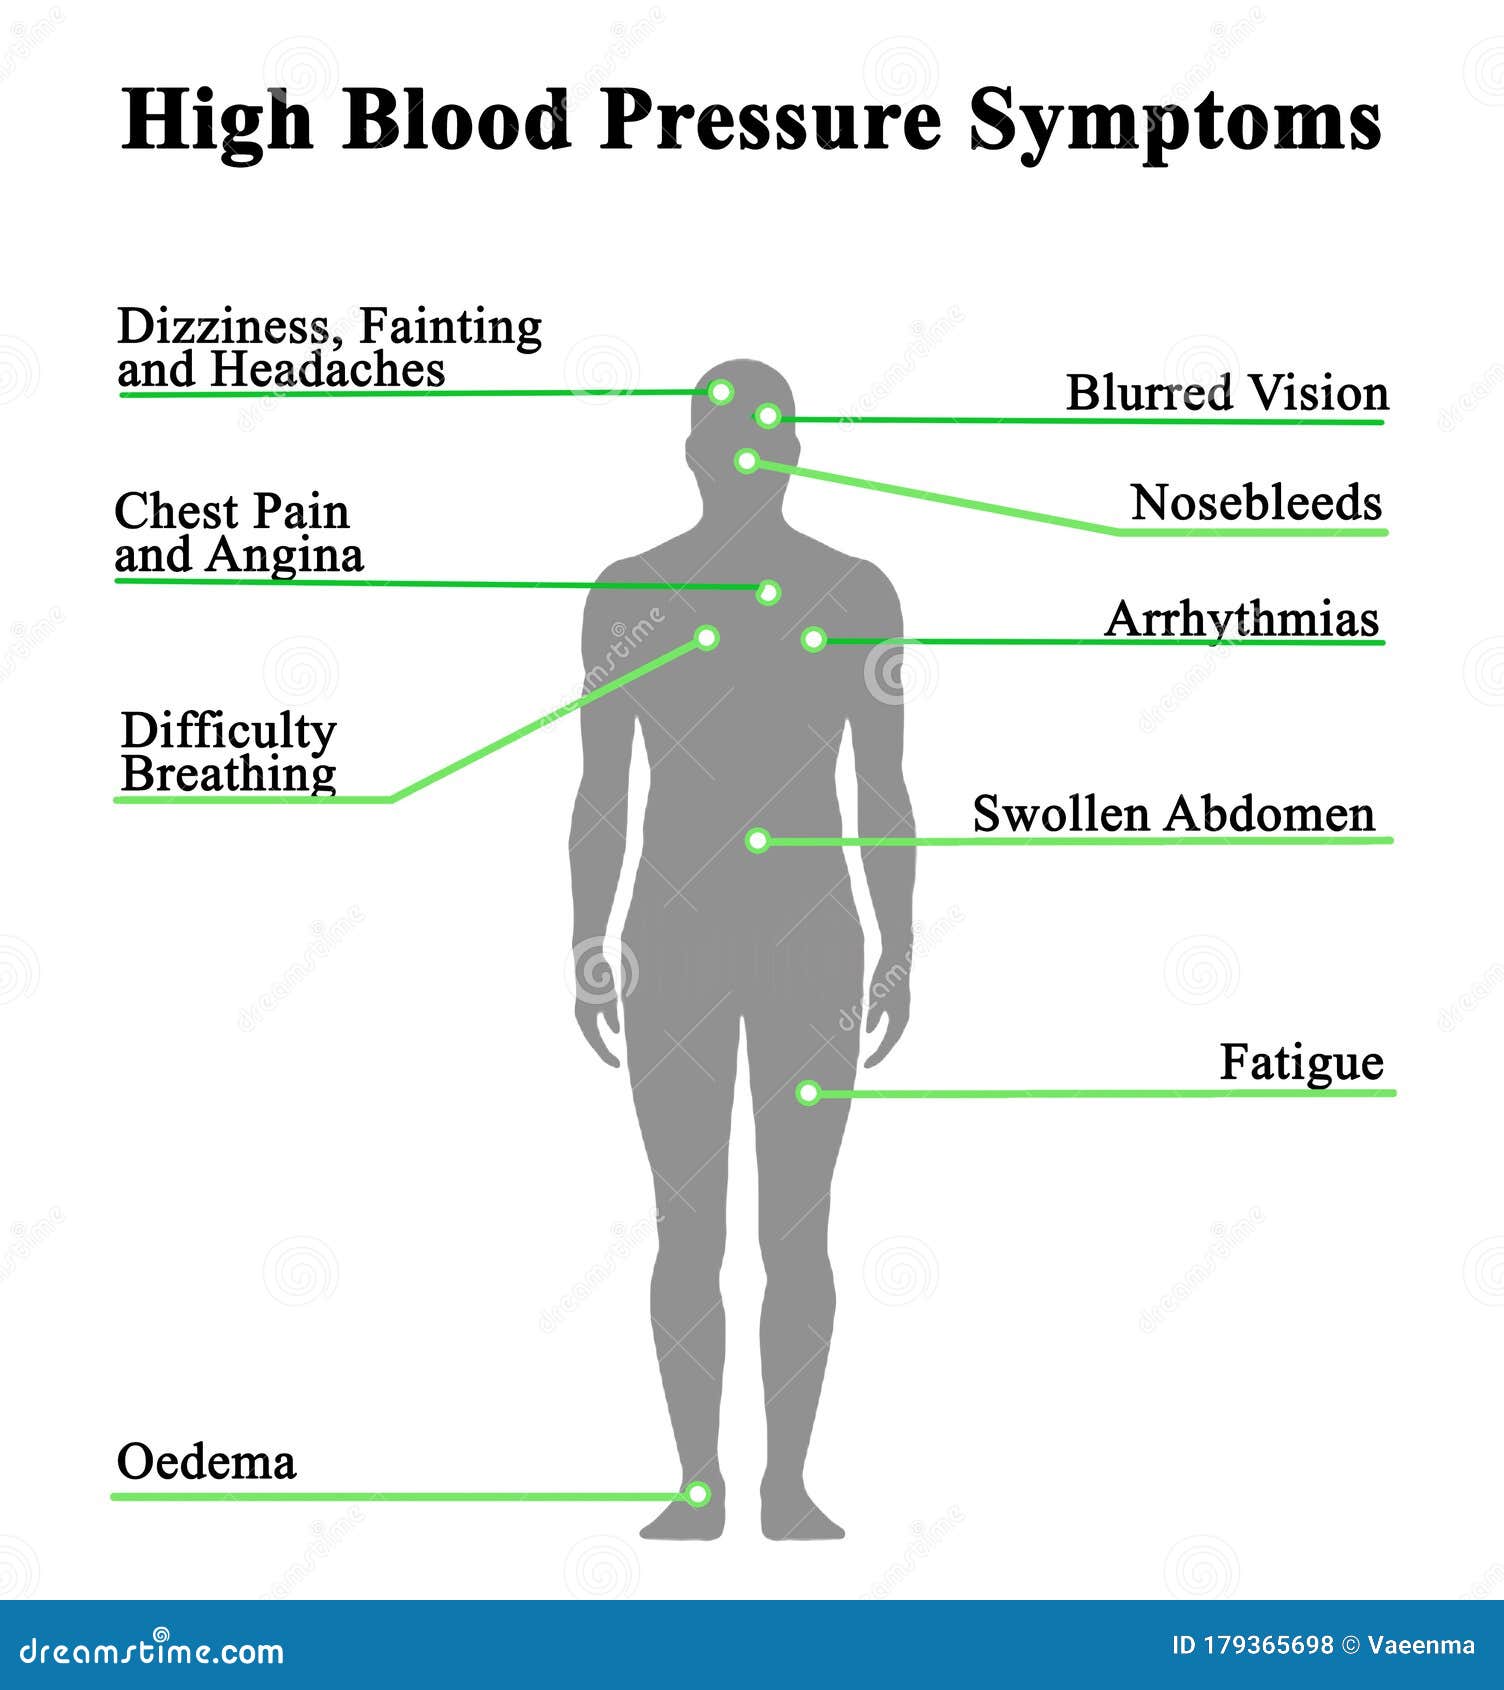 high blood pressure symptoms and treatment)